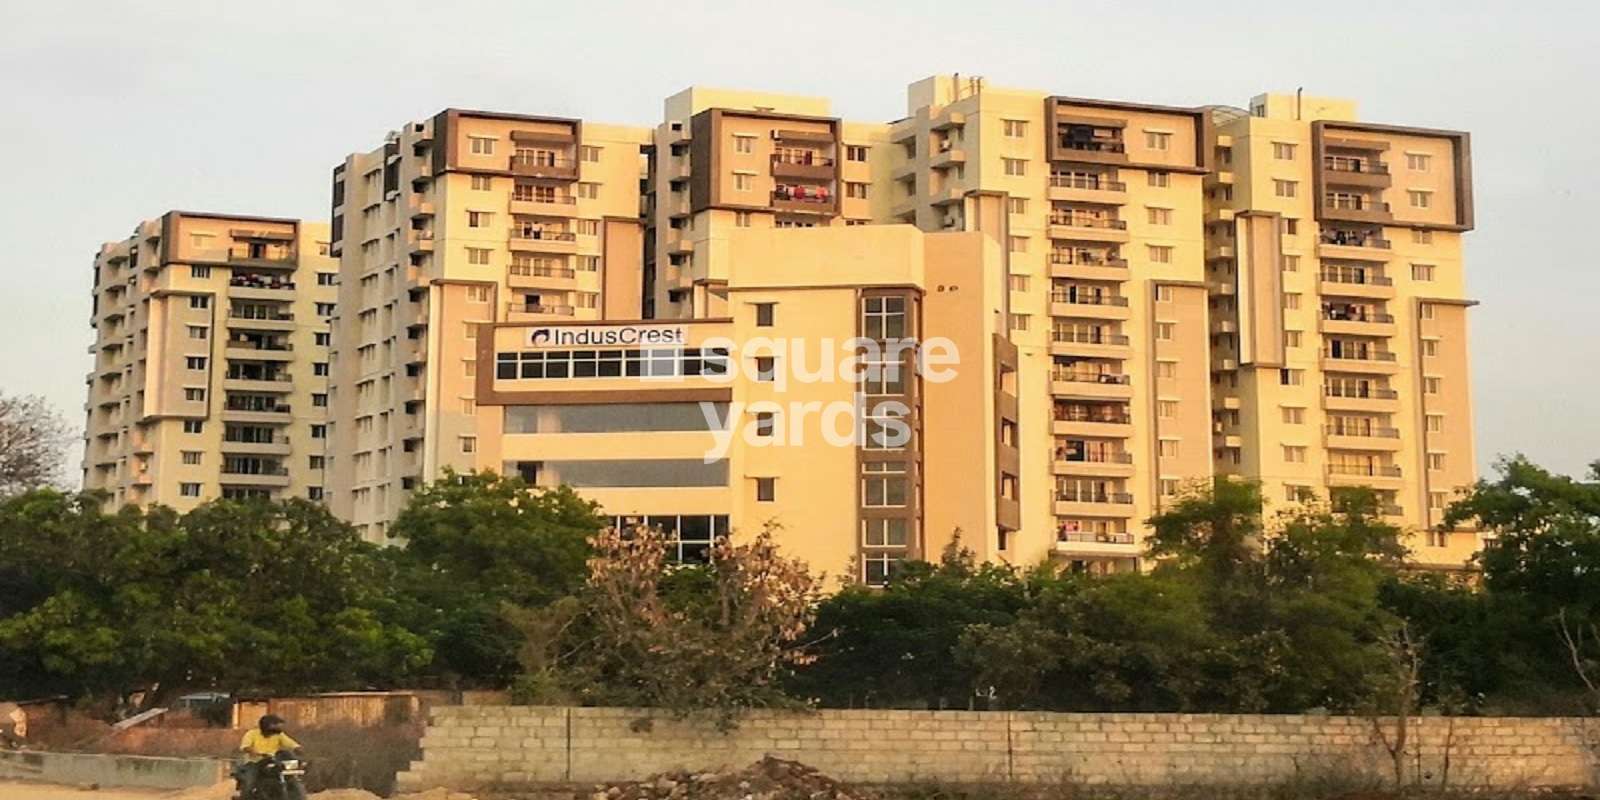 Induscrest Apartment Complex Cover Image